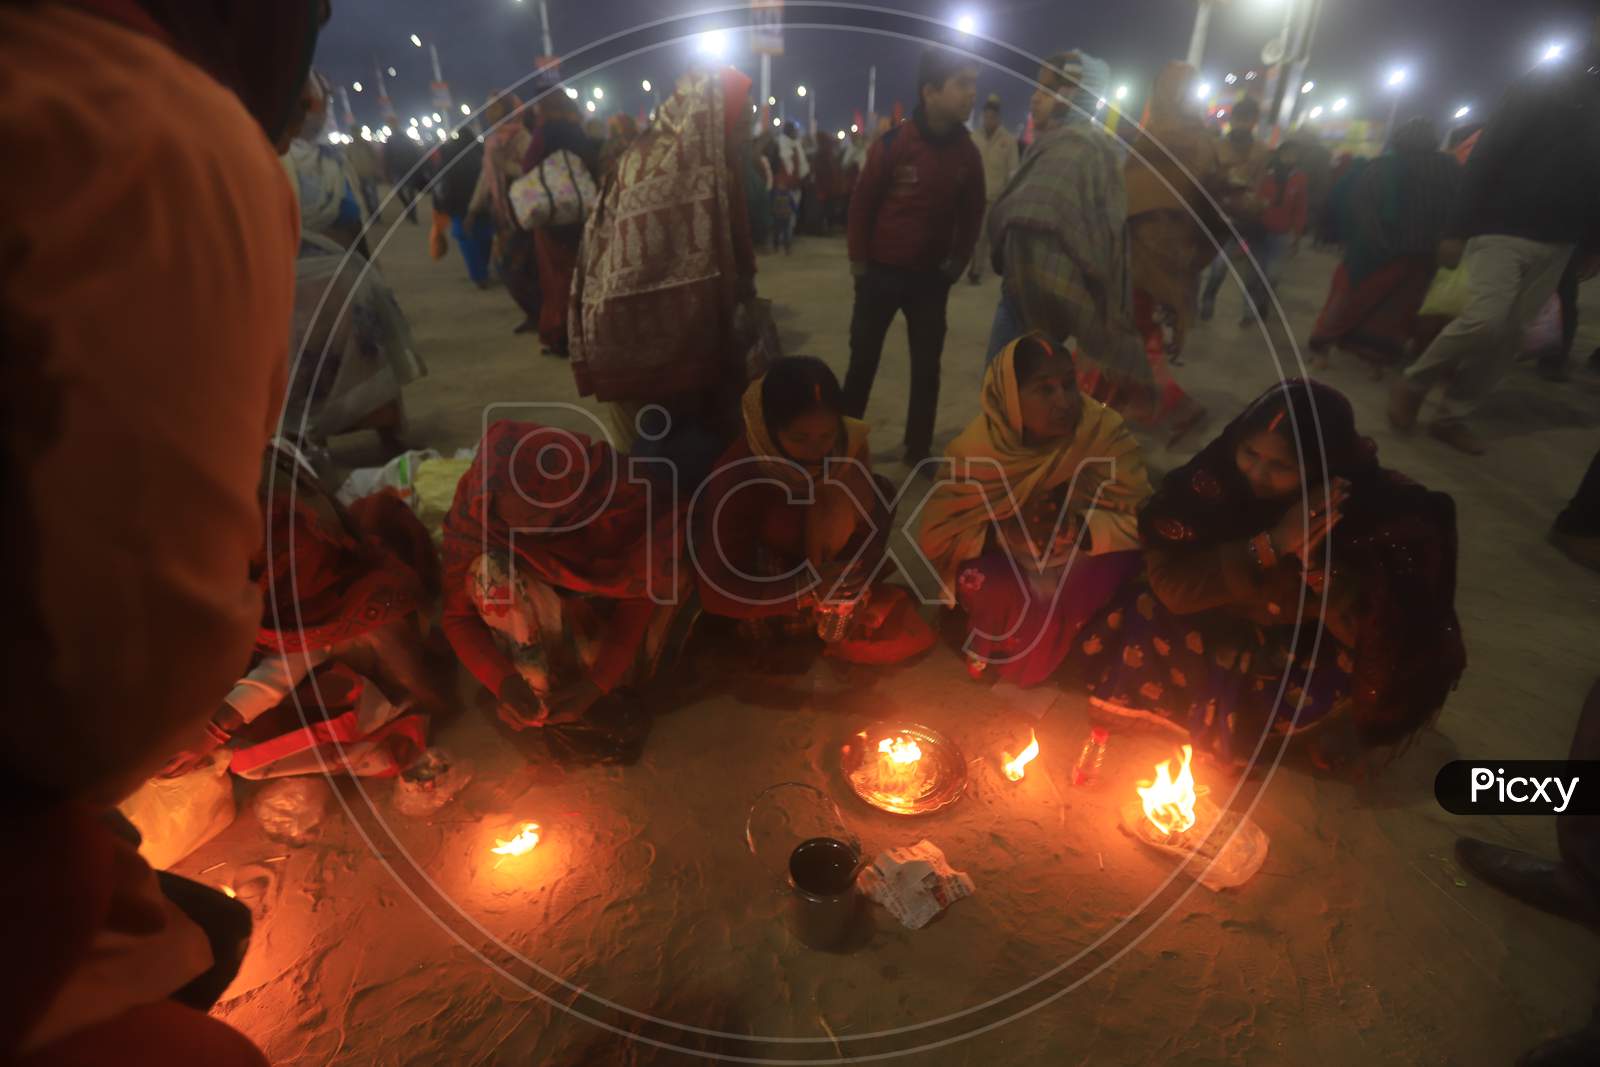 Crowd Of Hindu Devotees At Triveni Sangam River Bank  During Magh Mela 2020 in Prayagraj